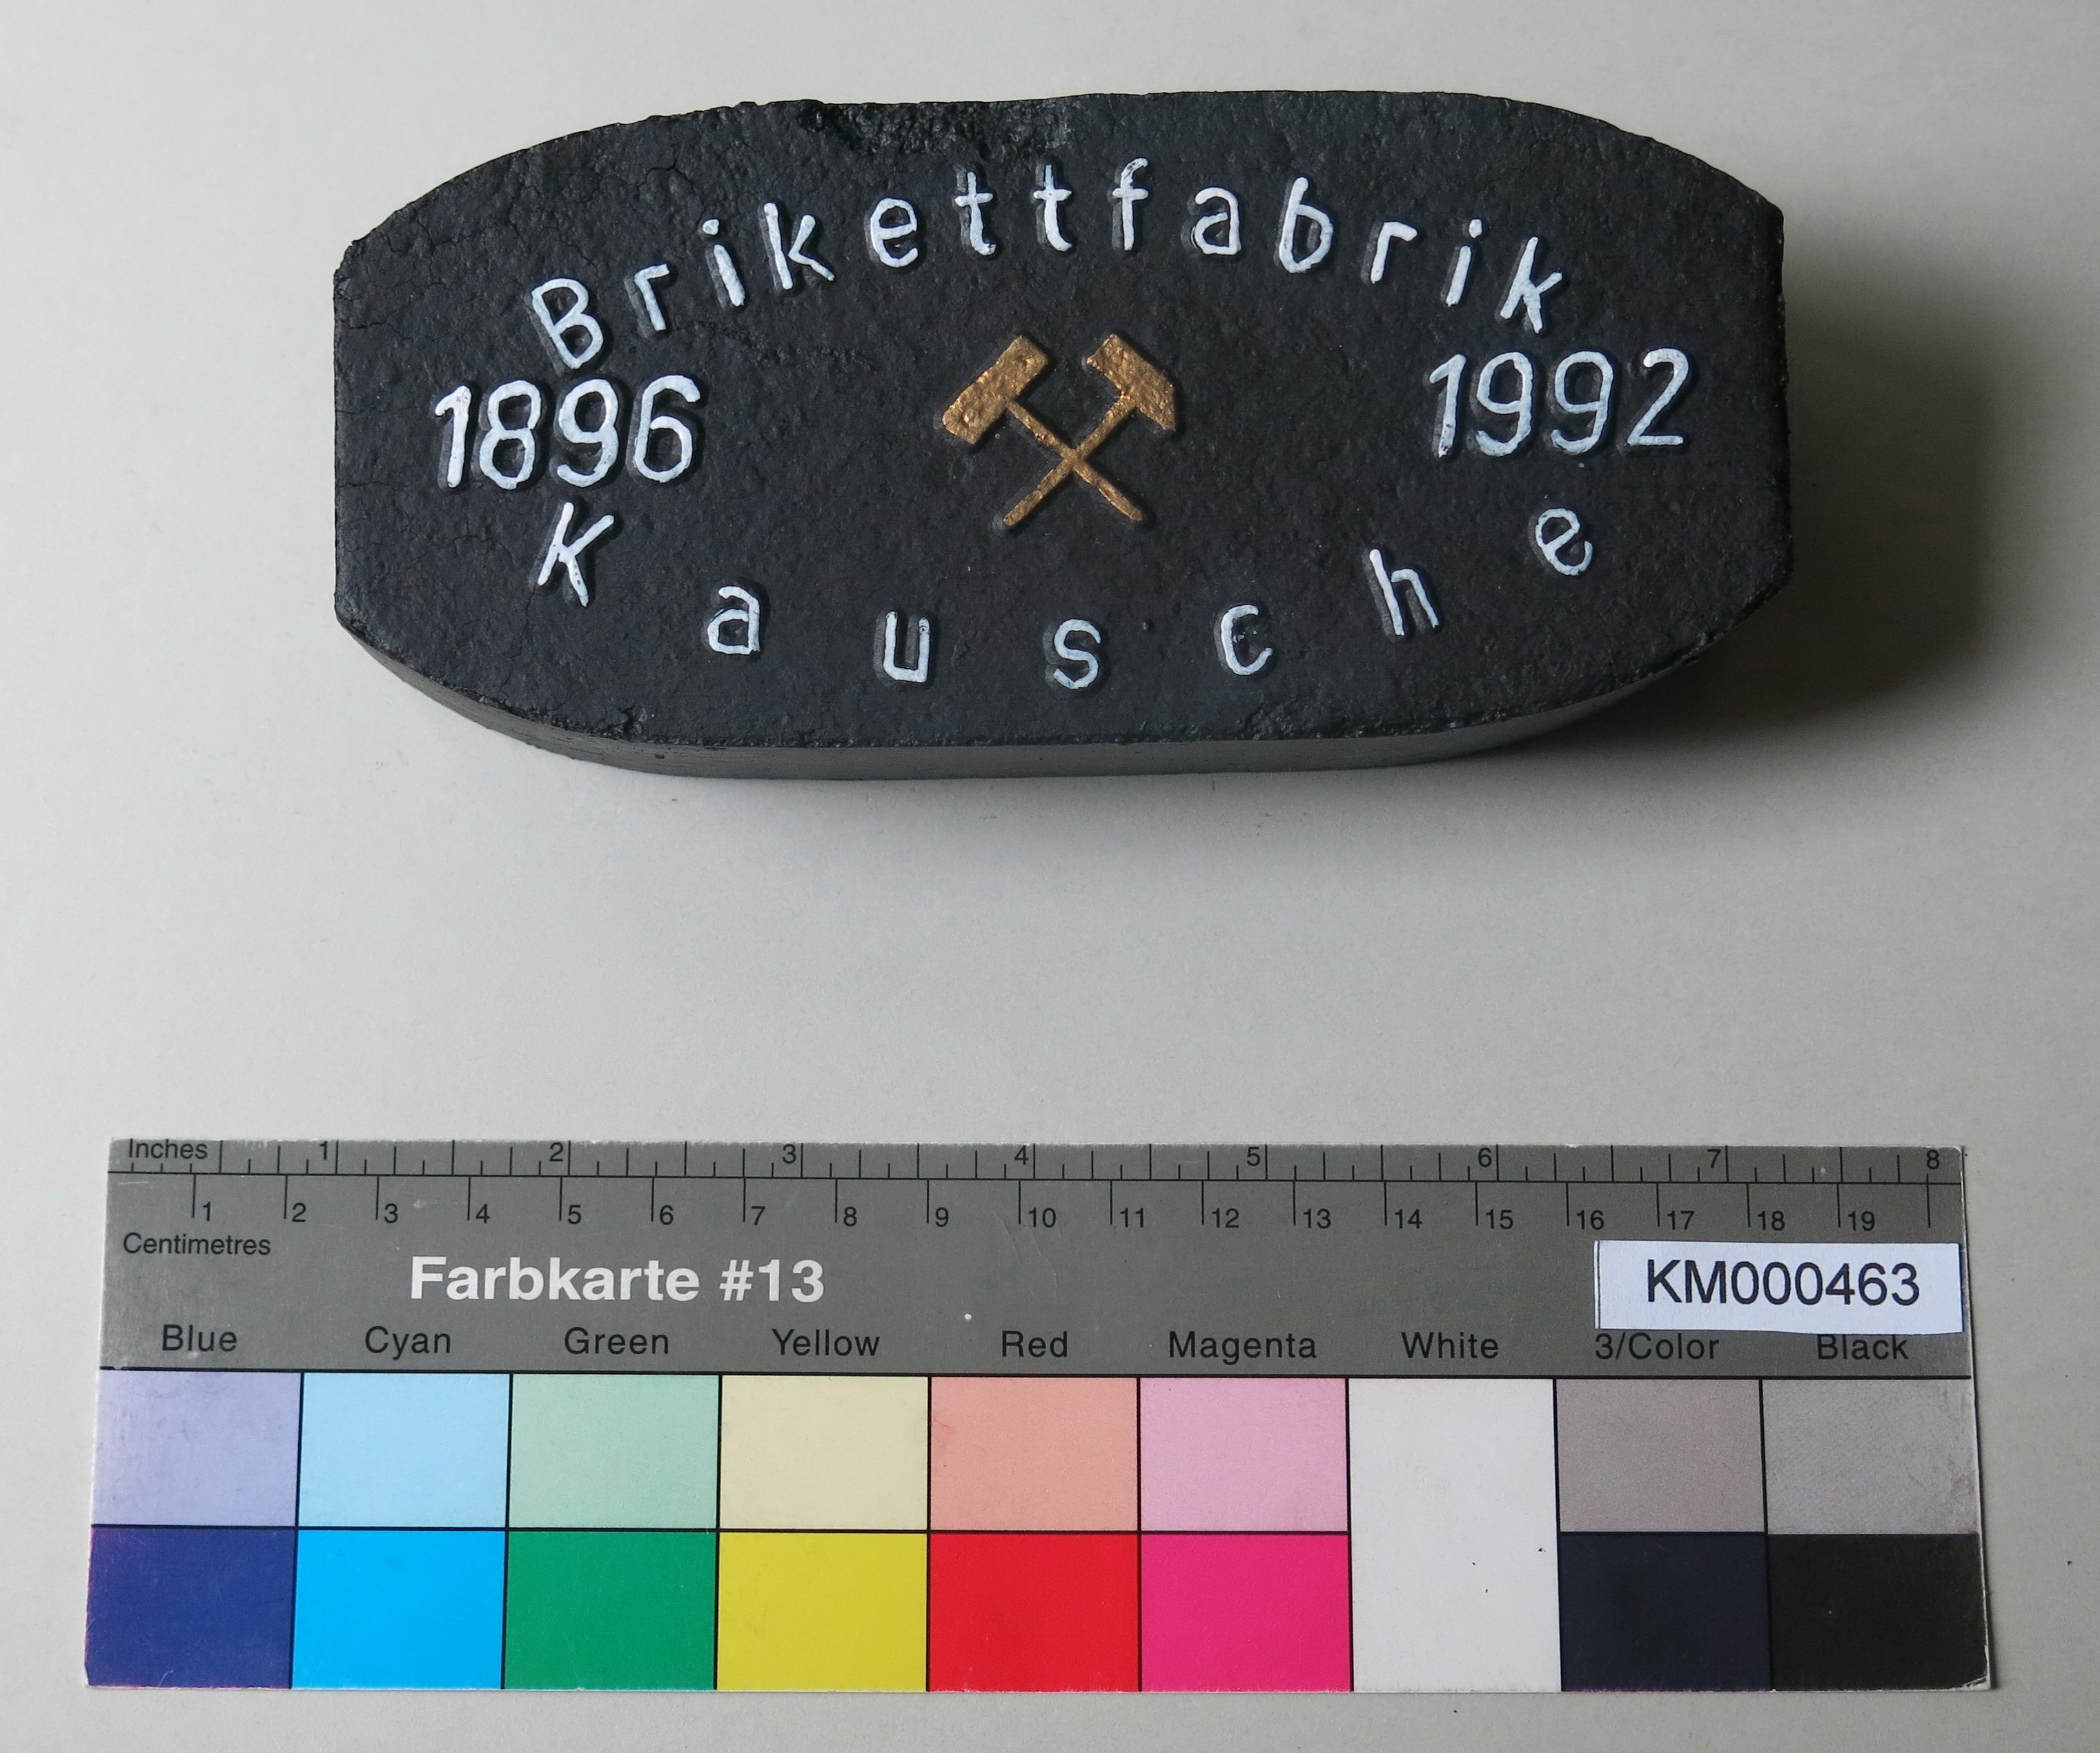 Zierbrikett "BRIKETTFABRIK 1896 1992 Kausche" (Energiefabrik Knappenrode CC BY-SA)